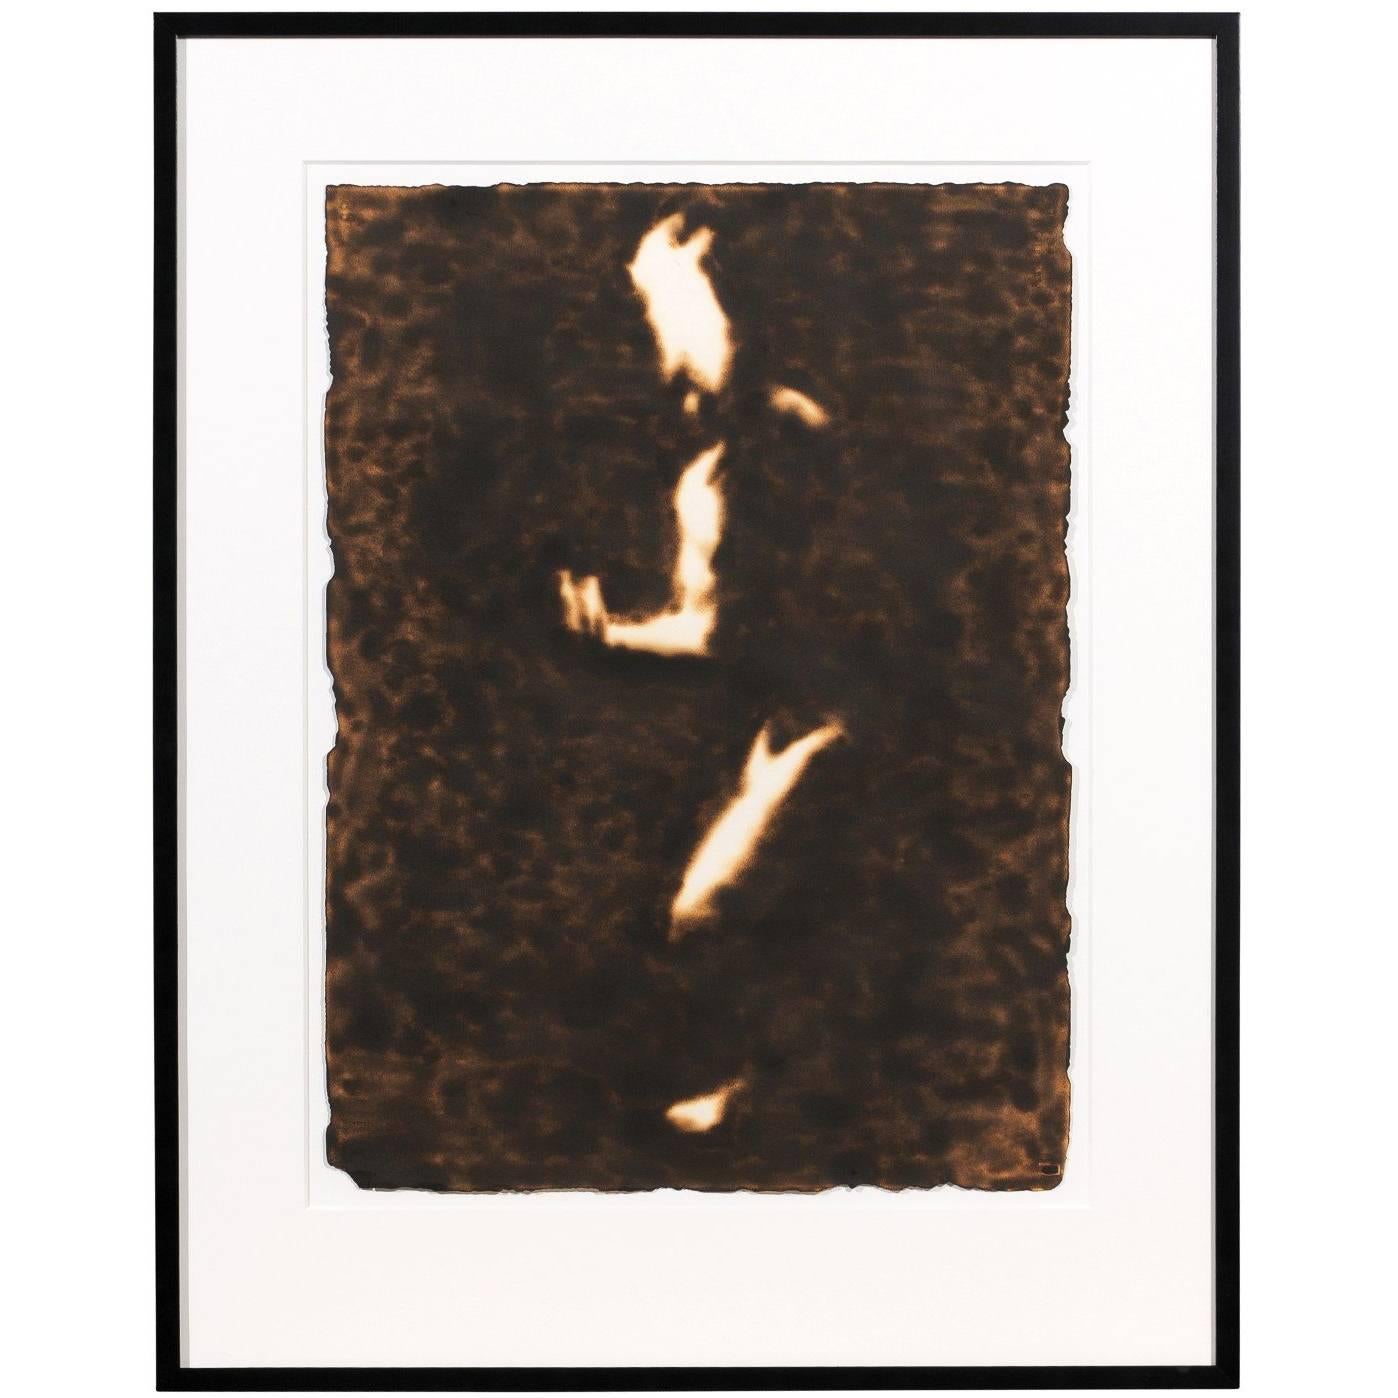 Paul Chojnowski "Figure in Darkness" Burn Drawing For Sale